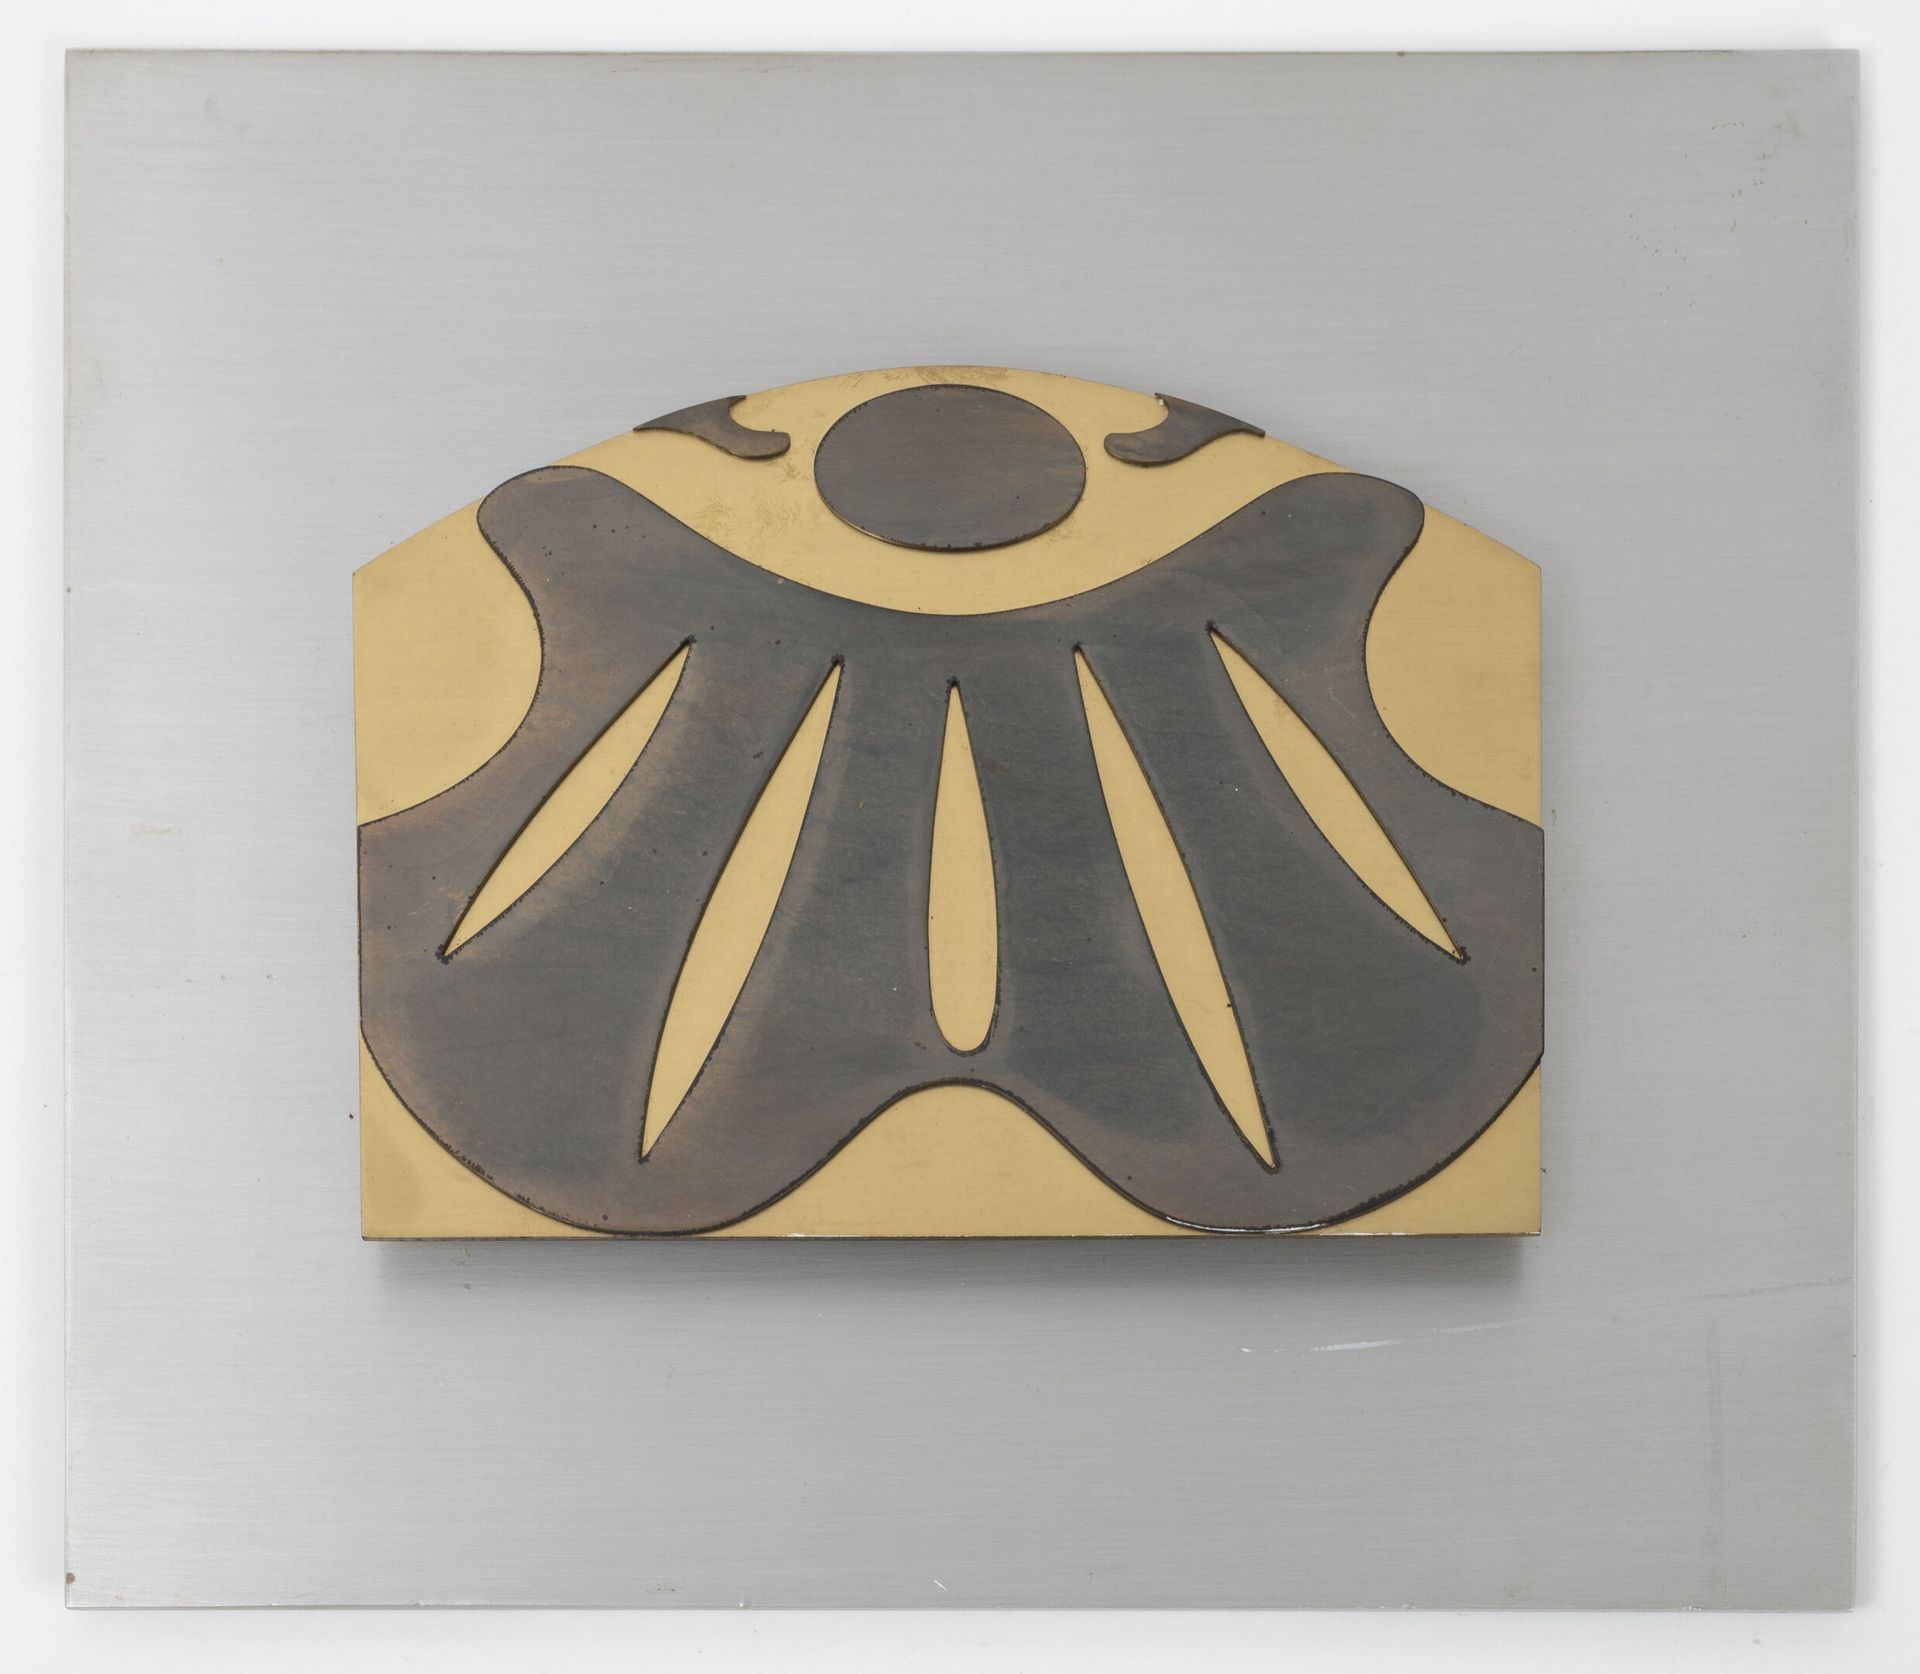 Jean LEGROS (1917-1981) 浮雕，约1970年。
黄铜，镀金黄铜和铝。
无符号。
24.5 x 28 cm。
刮痕、氧化和小摩擦。